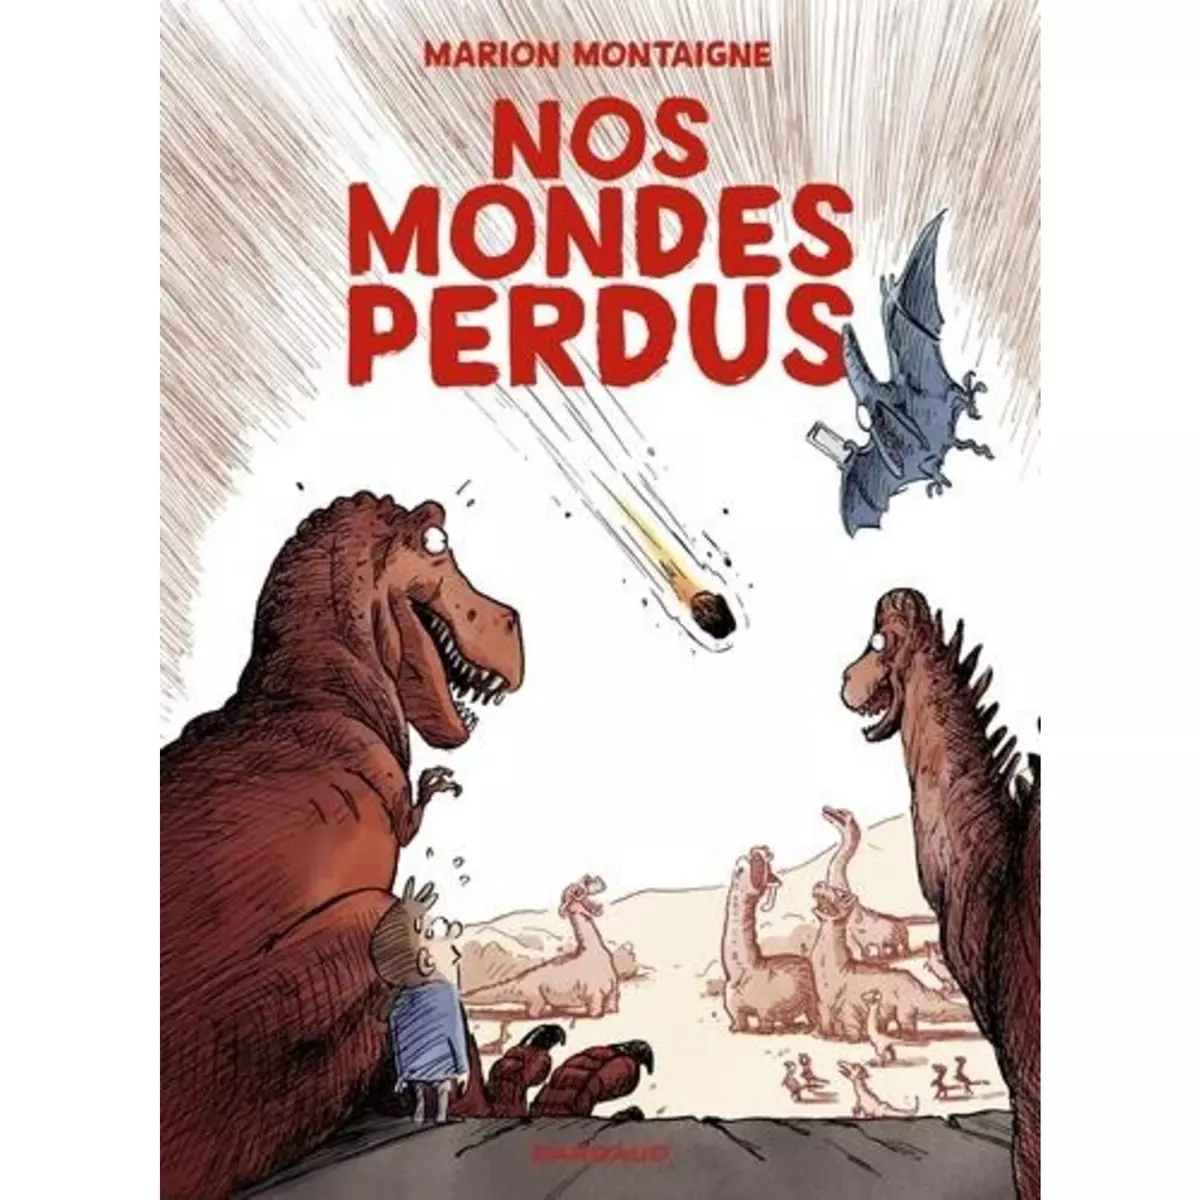  NOS MONDES PERDUS, Montaigne Marion